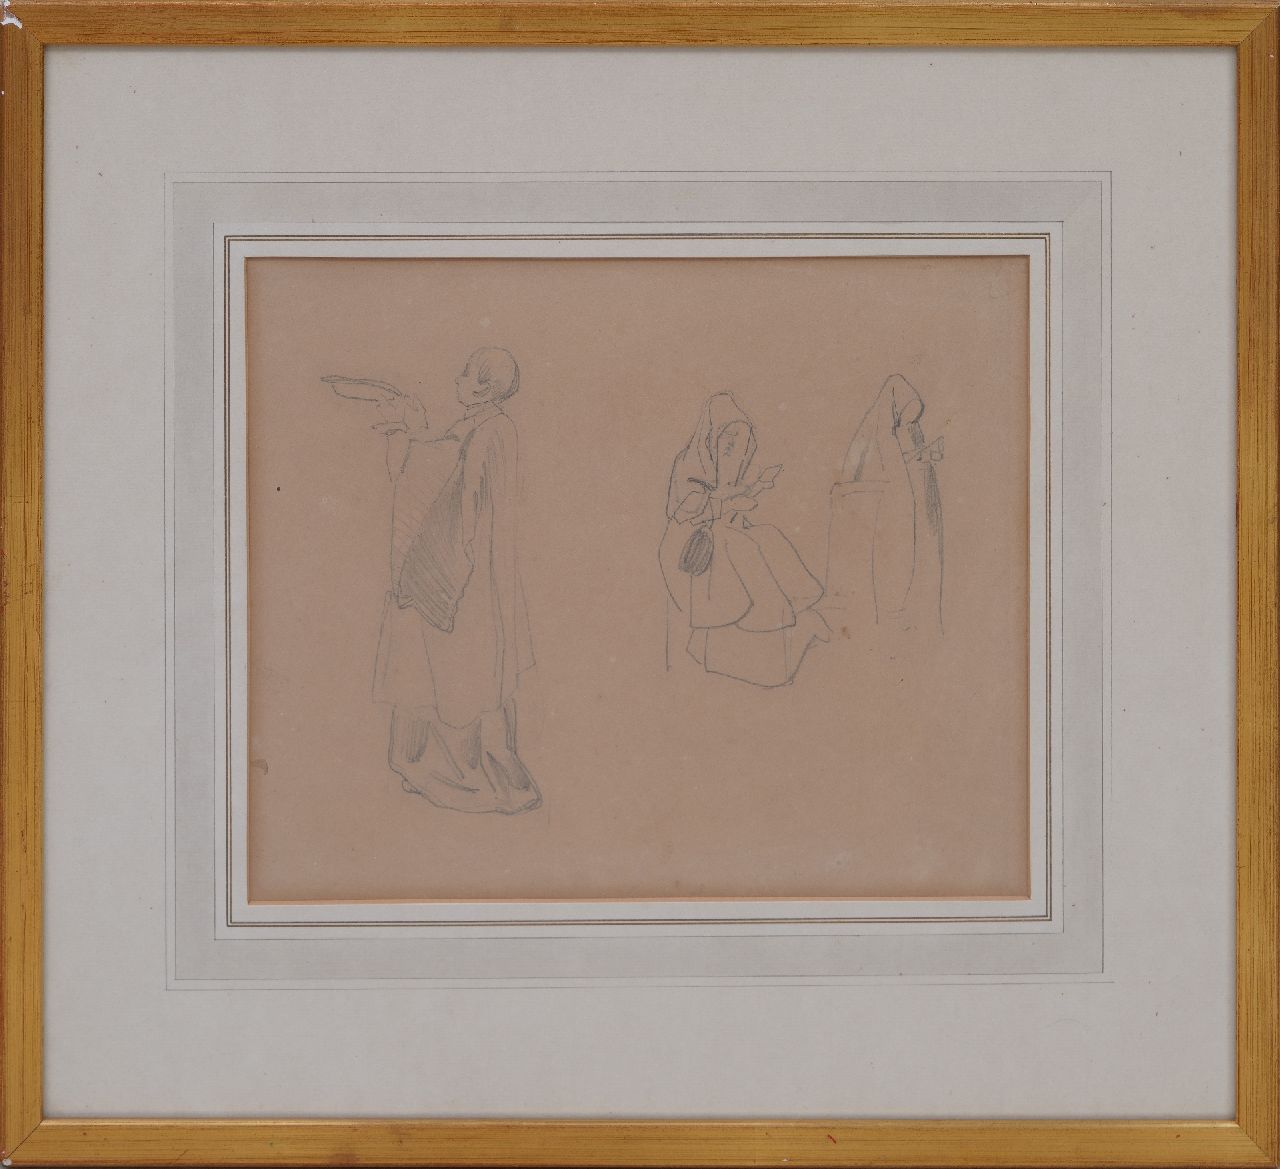 Bosboom J.  | Johannes Bosboom, A study of monks and nuns, pencil on paper 20.8 x 26.1 cm